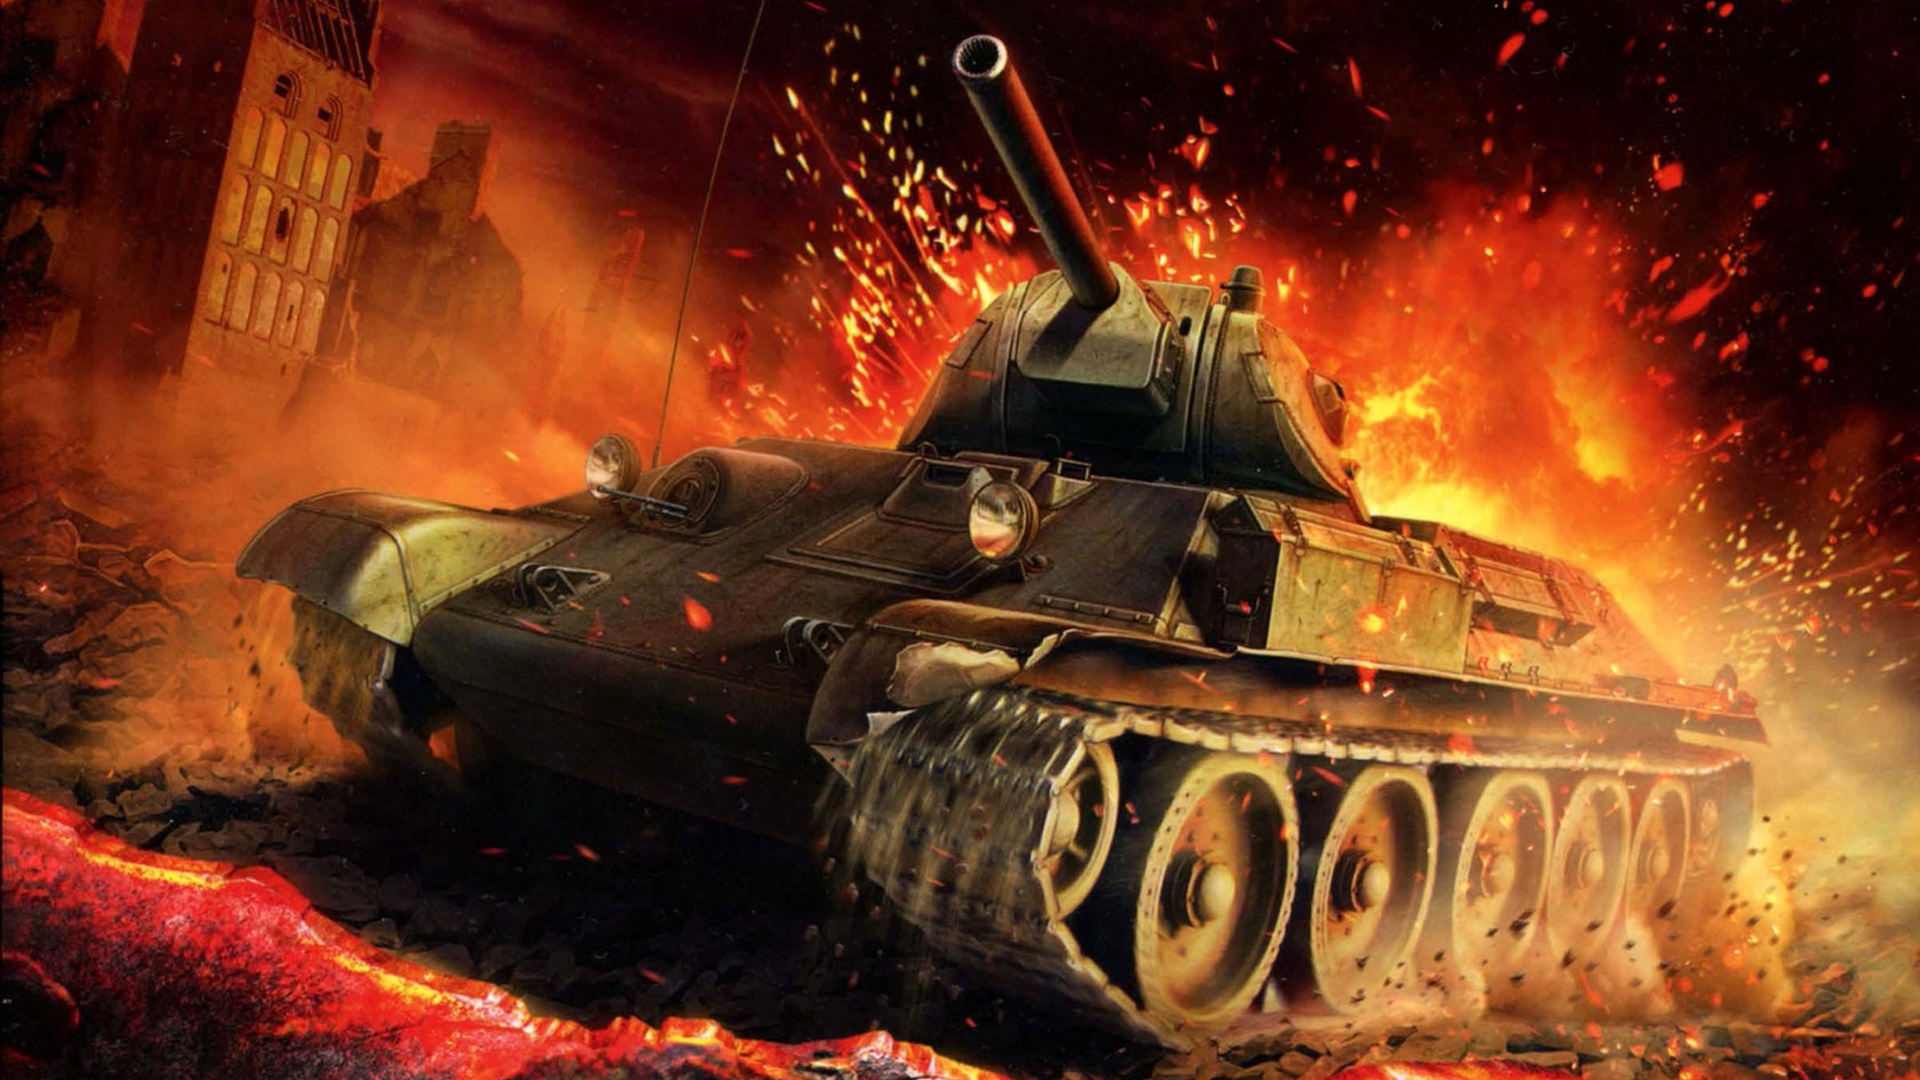 графика танки война Т-34 graphics tanks war T-34 без смс